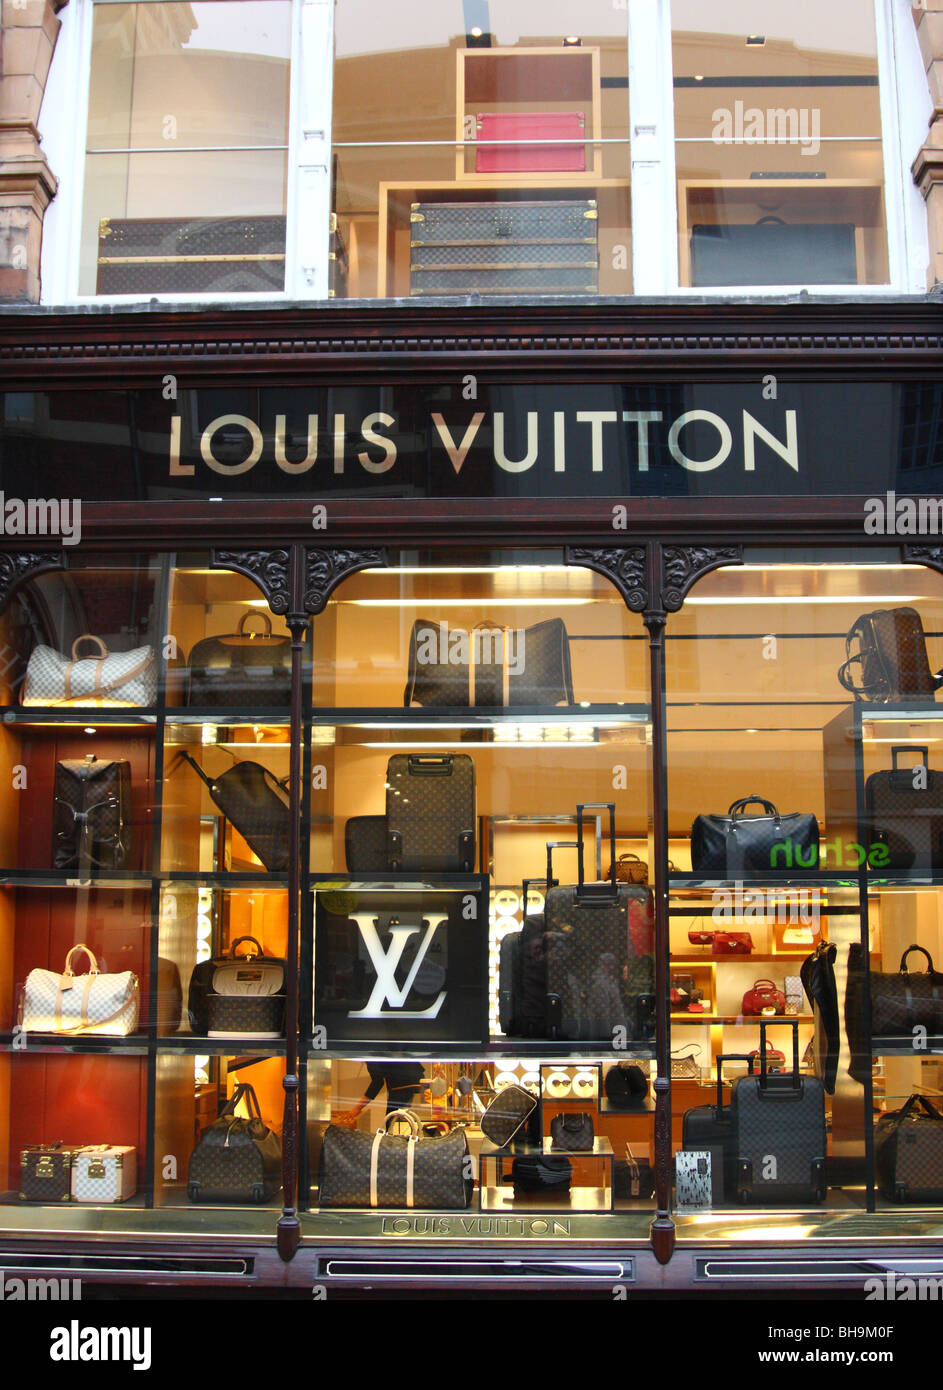 Louis Vuitton Ladengeschäft, Victoria Quarter, Leeds, England, Vereinigtes  Königreich Stockfotografie - Alamy